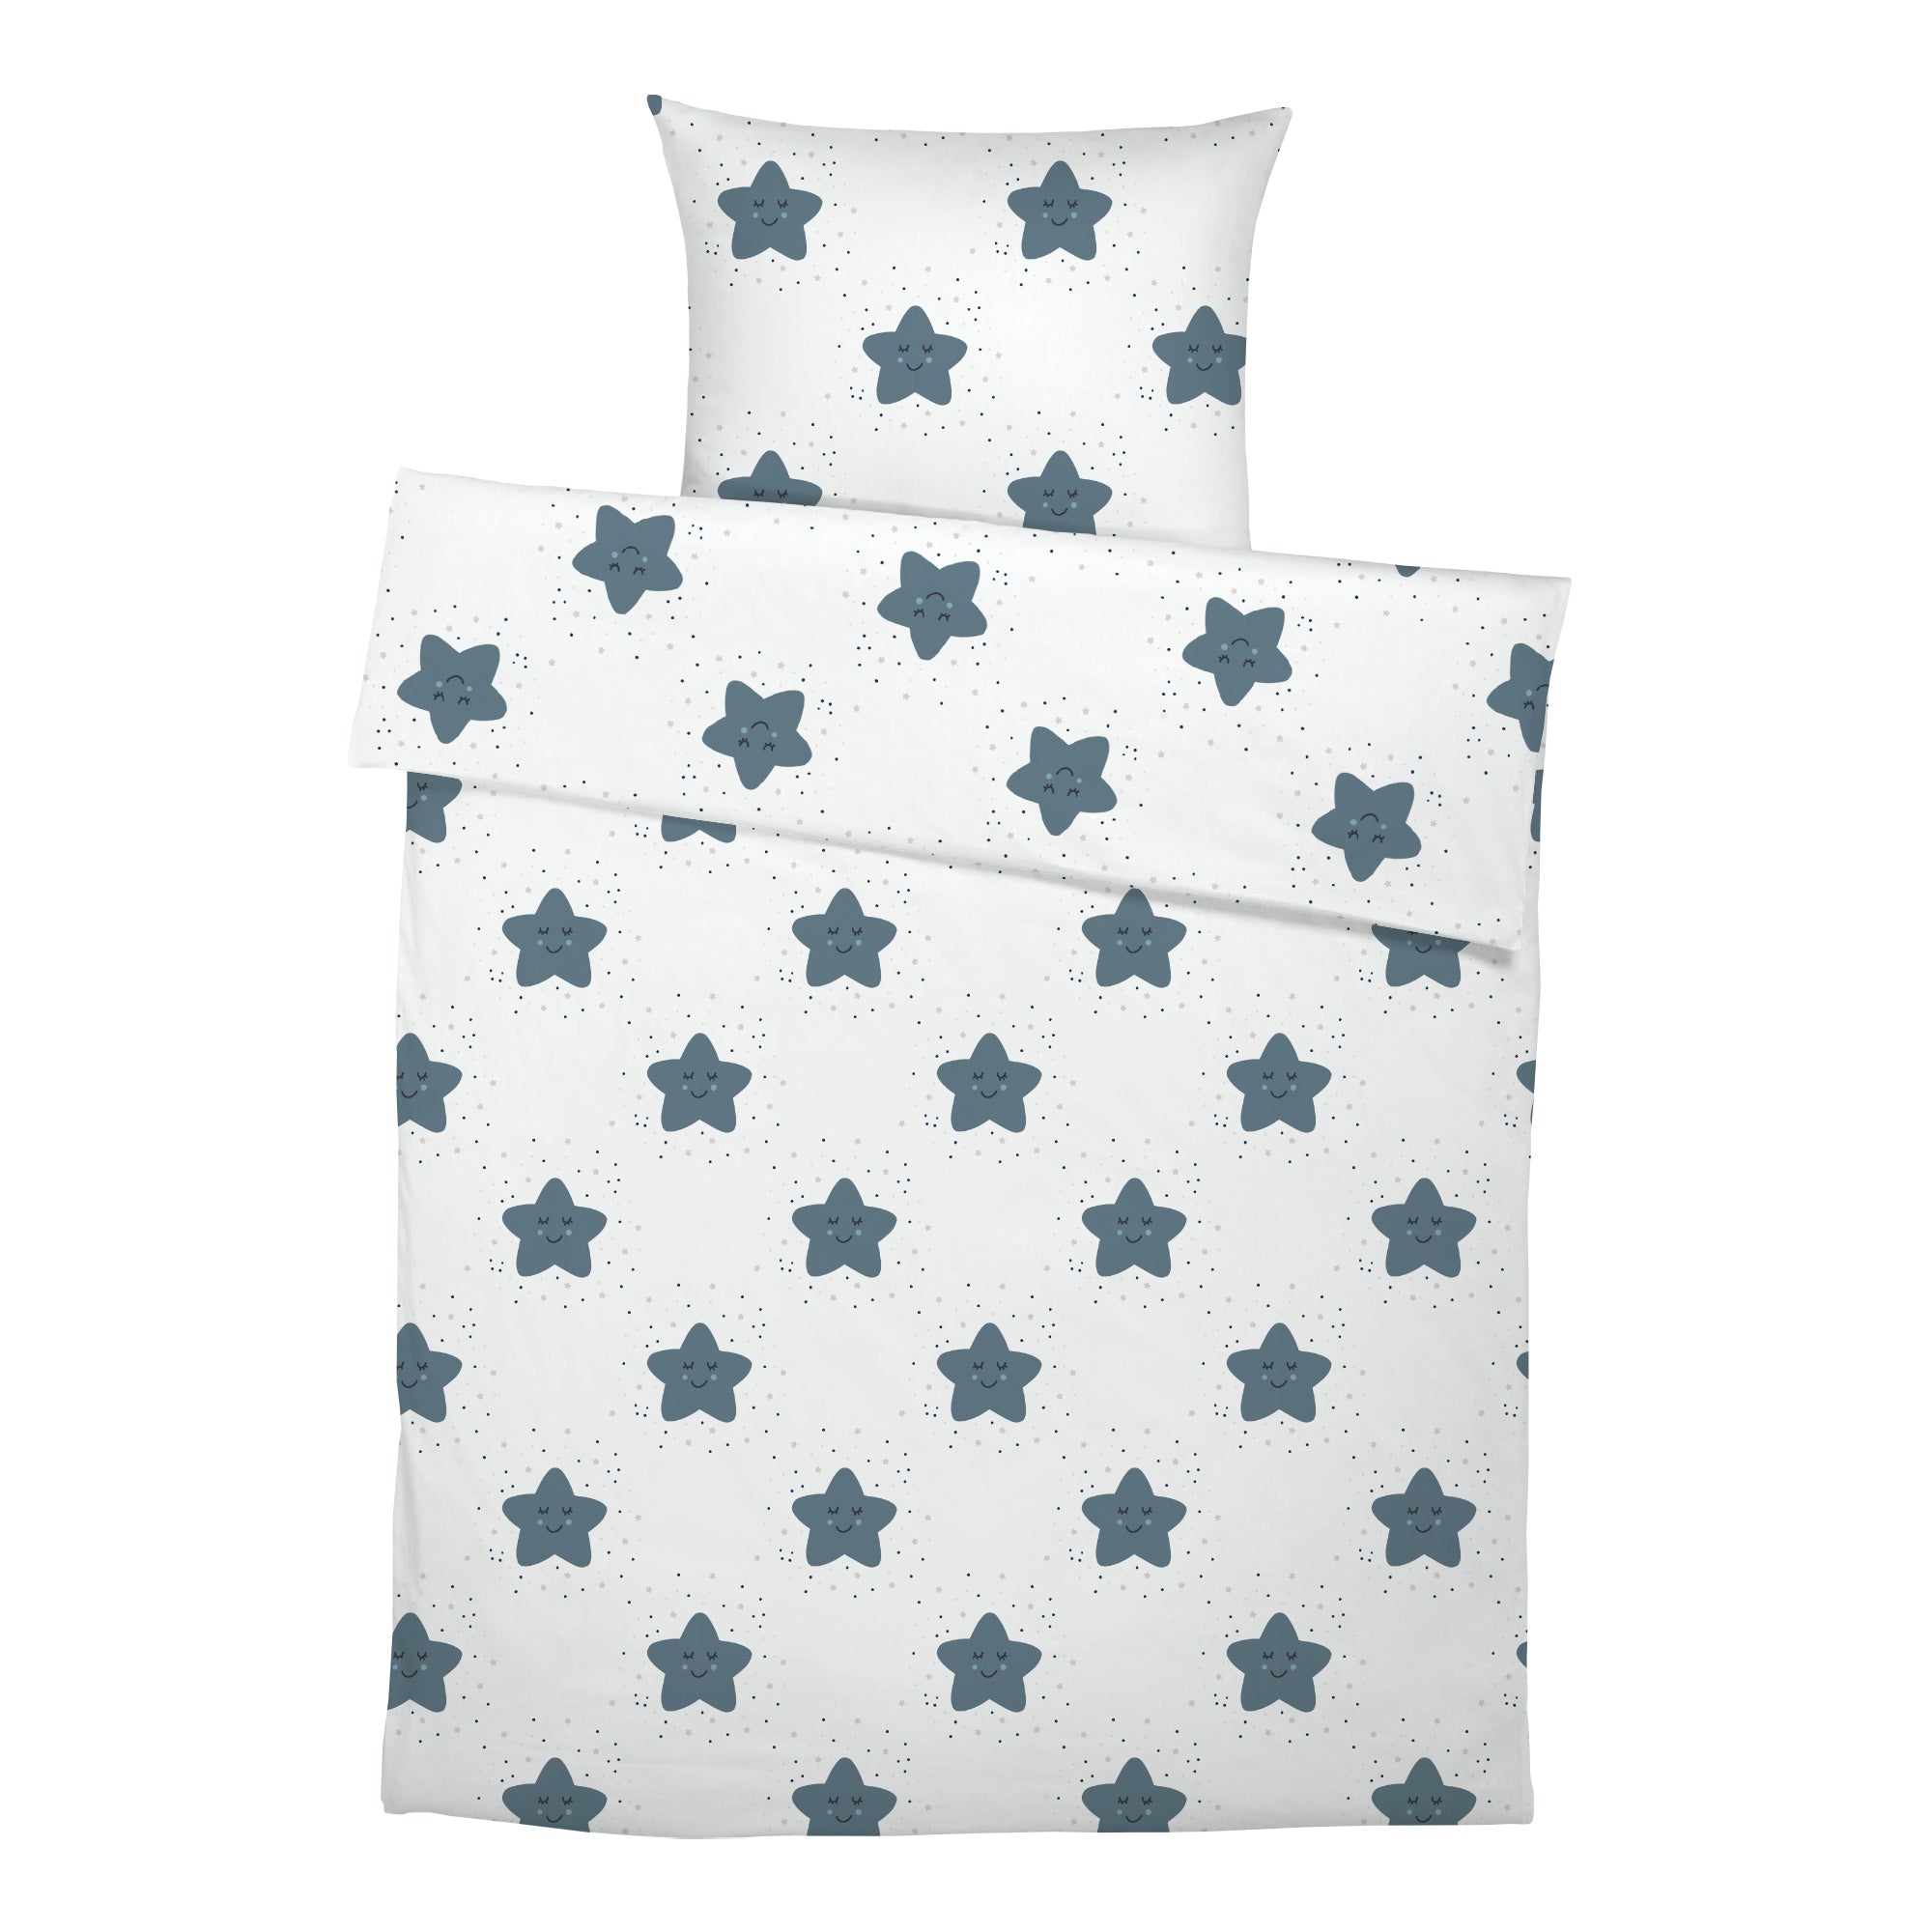 "Stars" premium children's bed linen